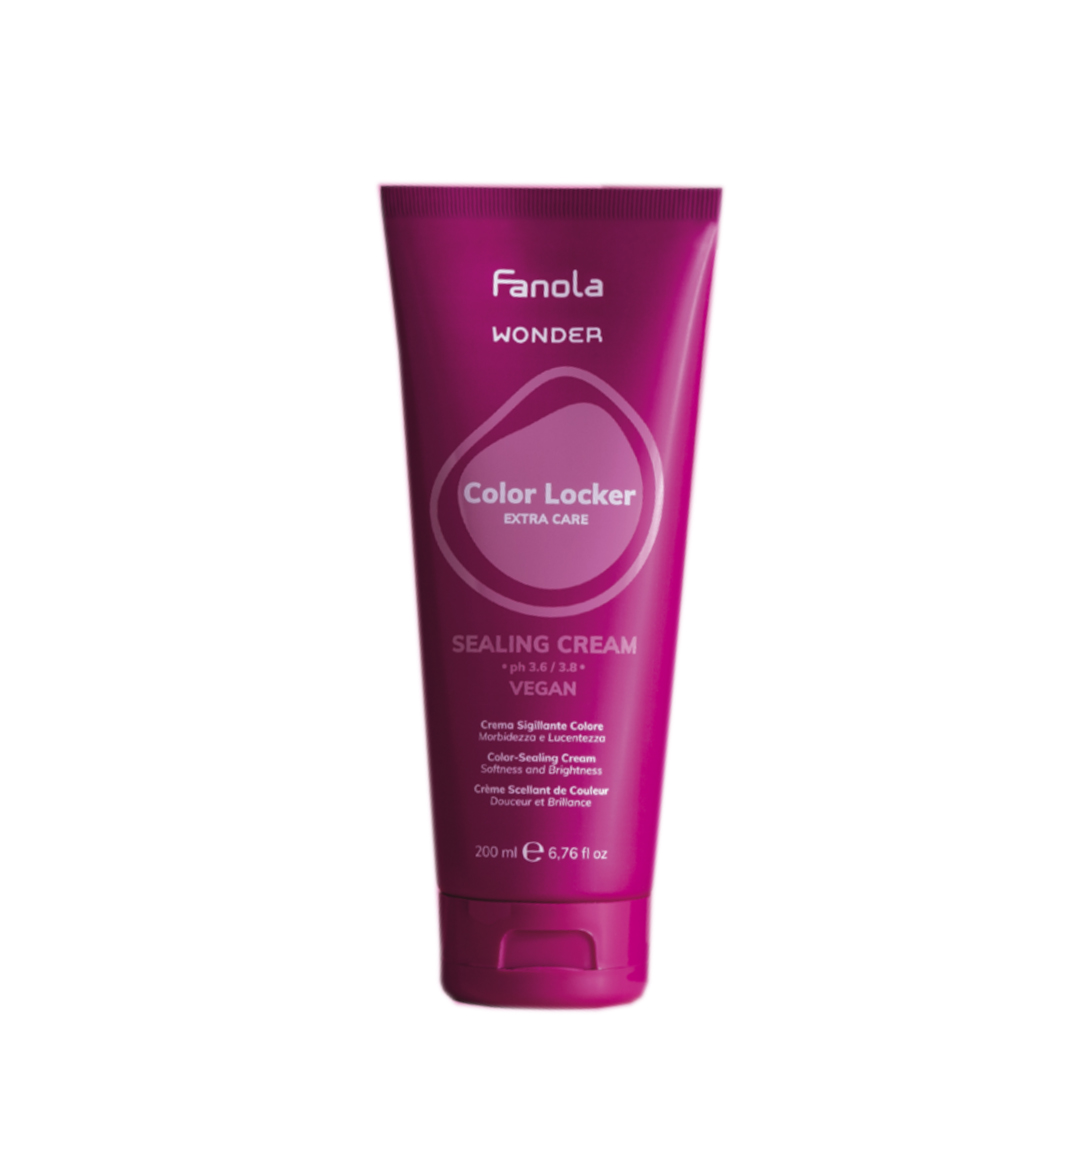 FANOLA WONDER Color Locker Extra Care Sealing Cream Vegan 200 ml